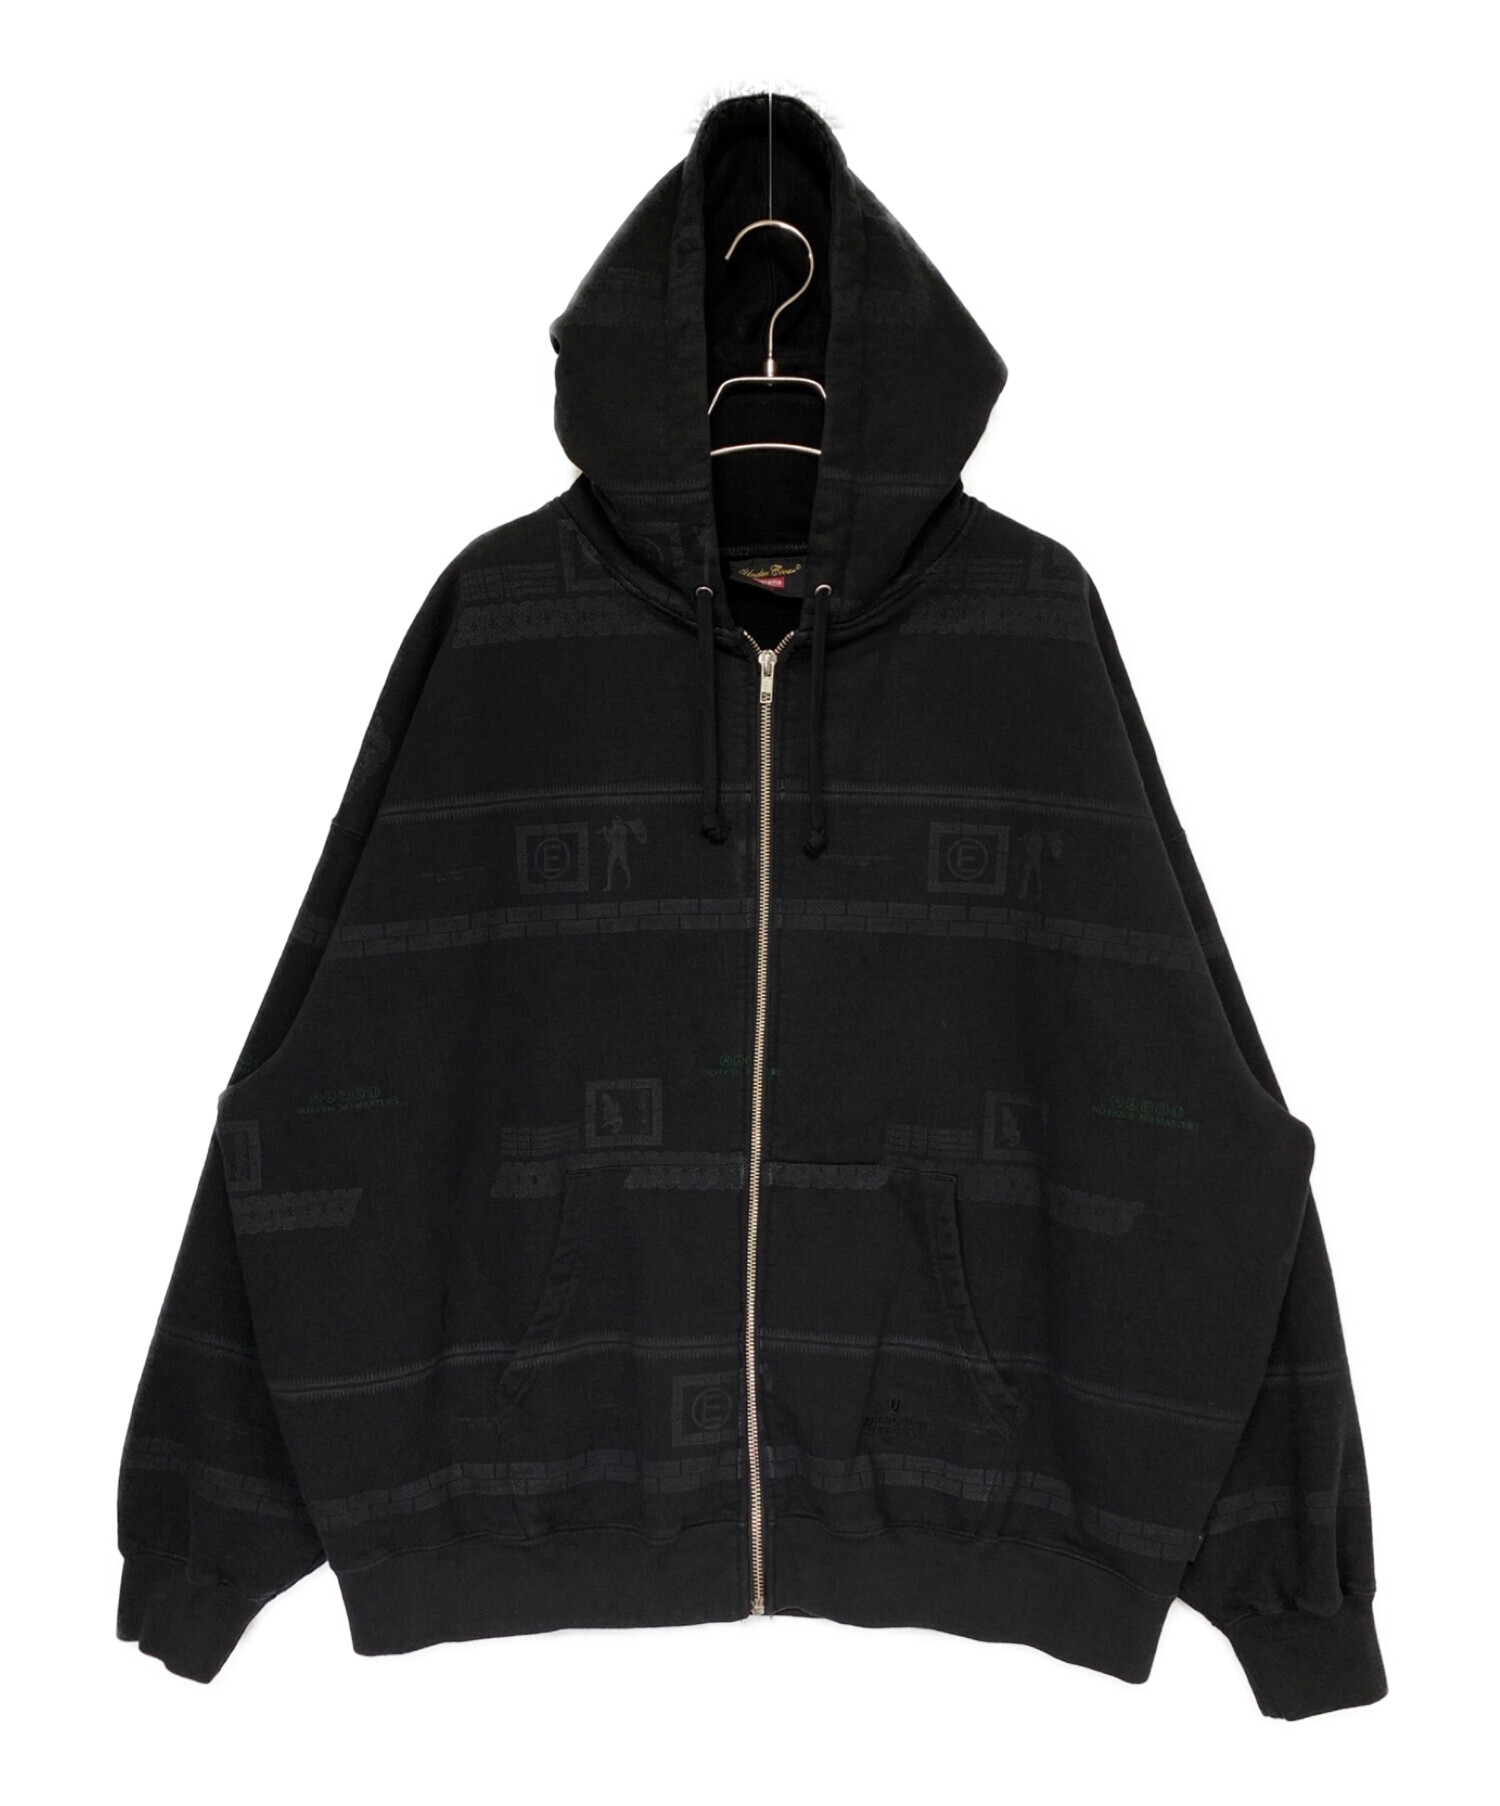 SUPREME (シュプリーム) UNDERCOVER (アンダーカバー) Zip Up Hooded Sweatshirt ブラック サイズ:L